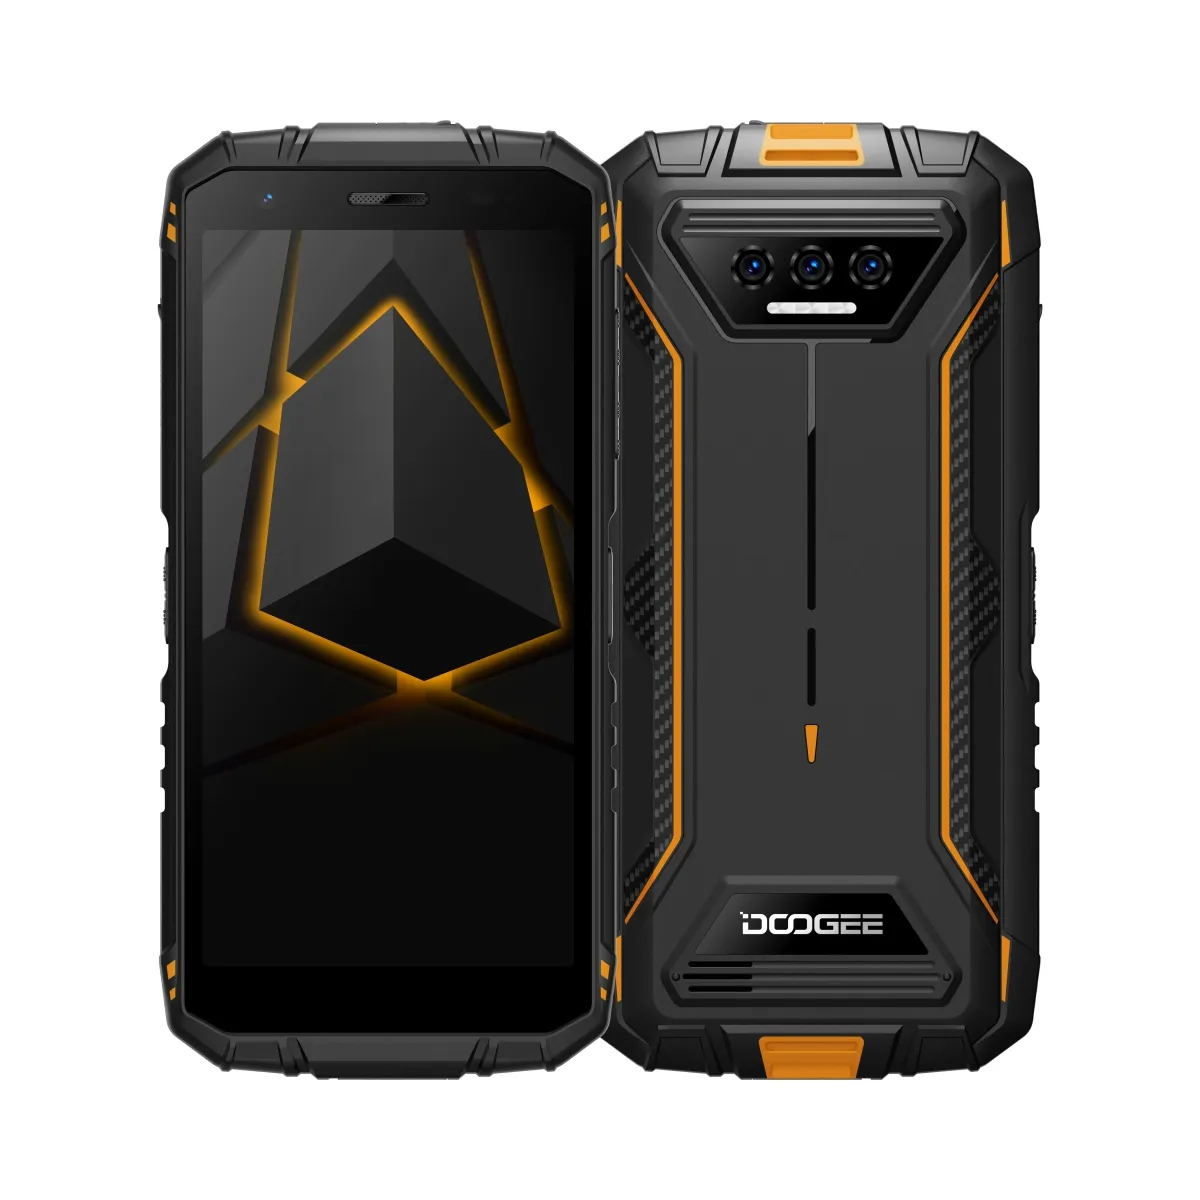 DOOGEE S41สมาร์ทโฟนทนทาน3GB 16GB 6300MAh,โทรศัพท์มือถือแอนดรอยด์12 4G หน้าจอ5.5นิ้ว NFC